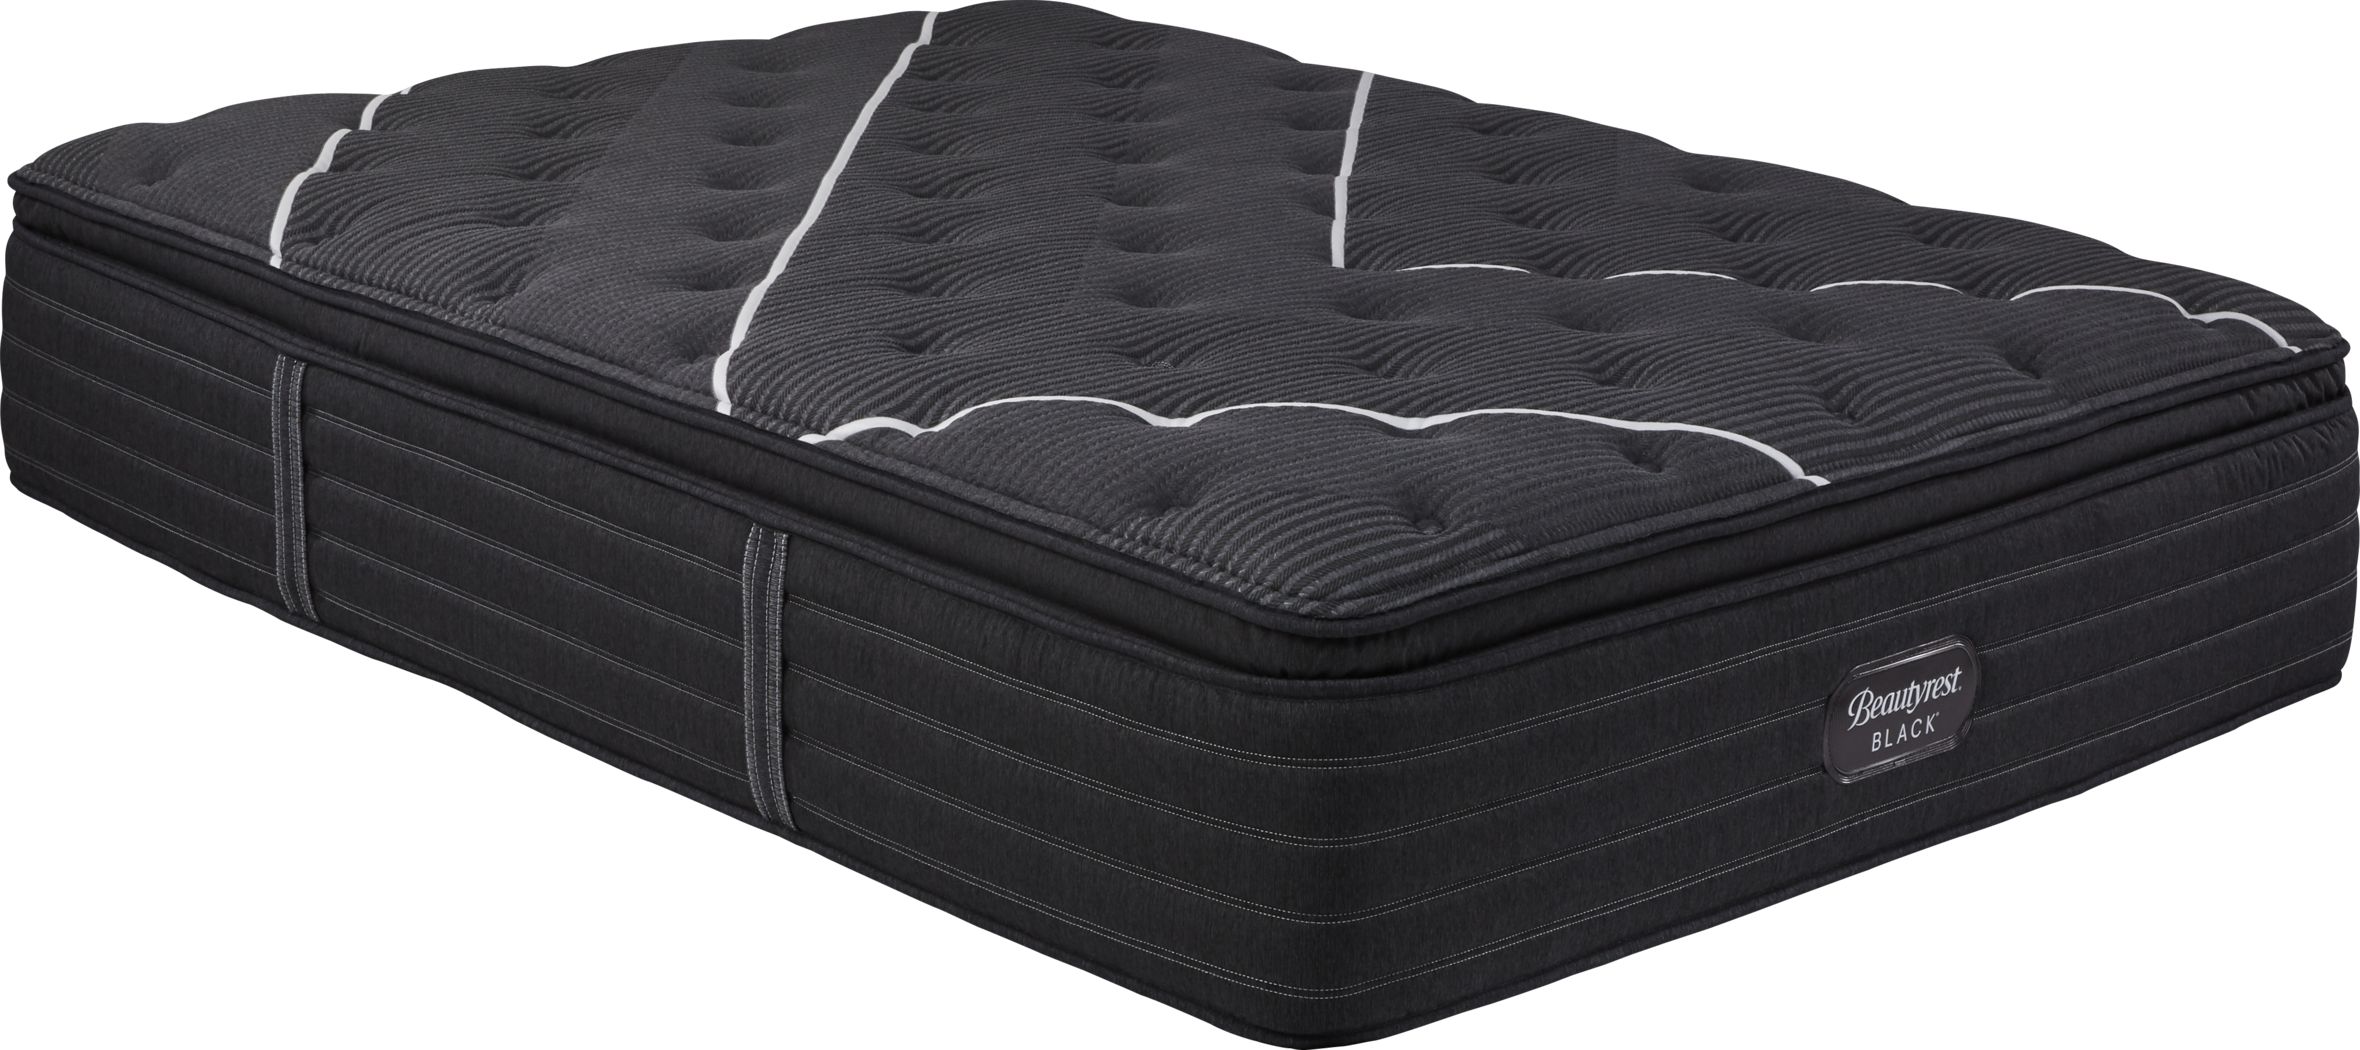 black label cali king mattress plush